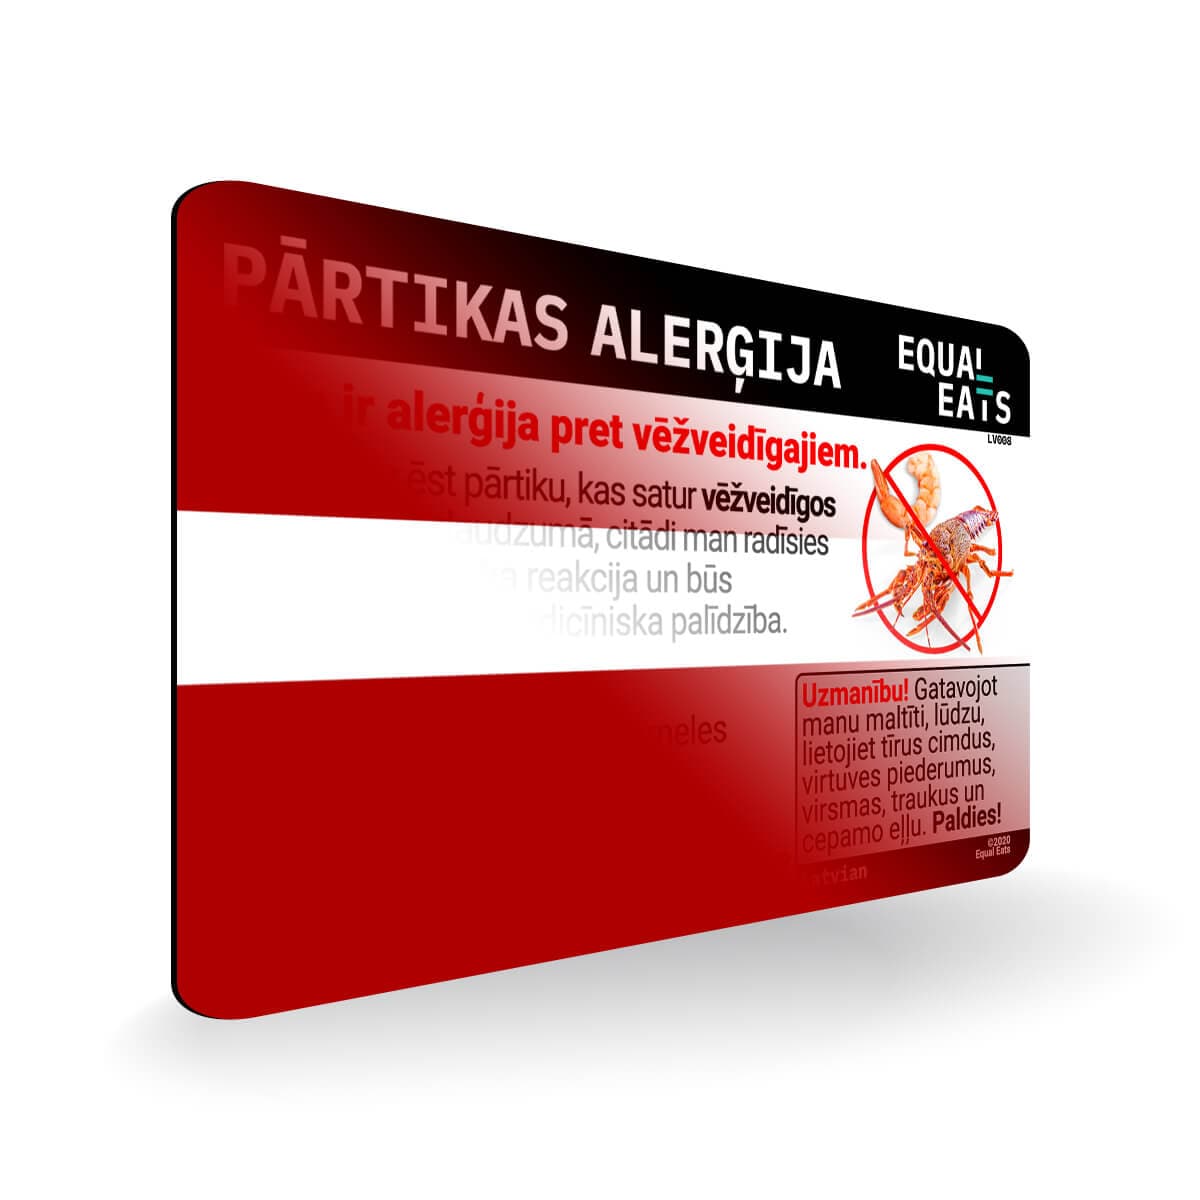 Crustacean Allergy in Latvian. Crustacean Allergy Card for Latvia